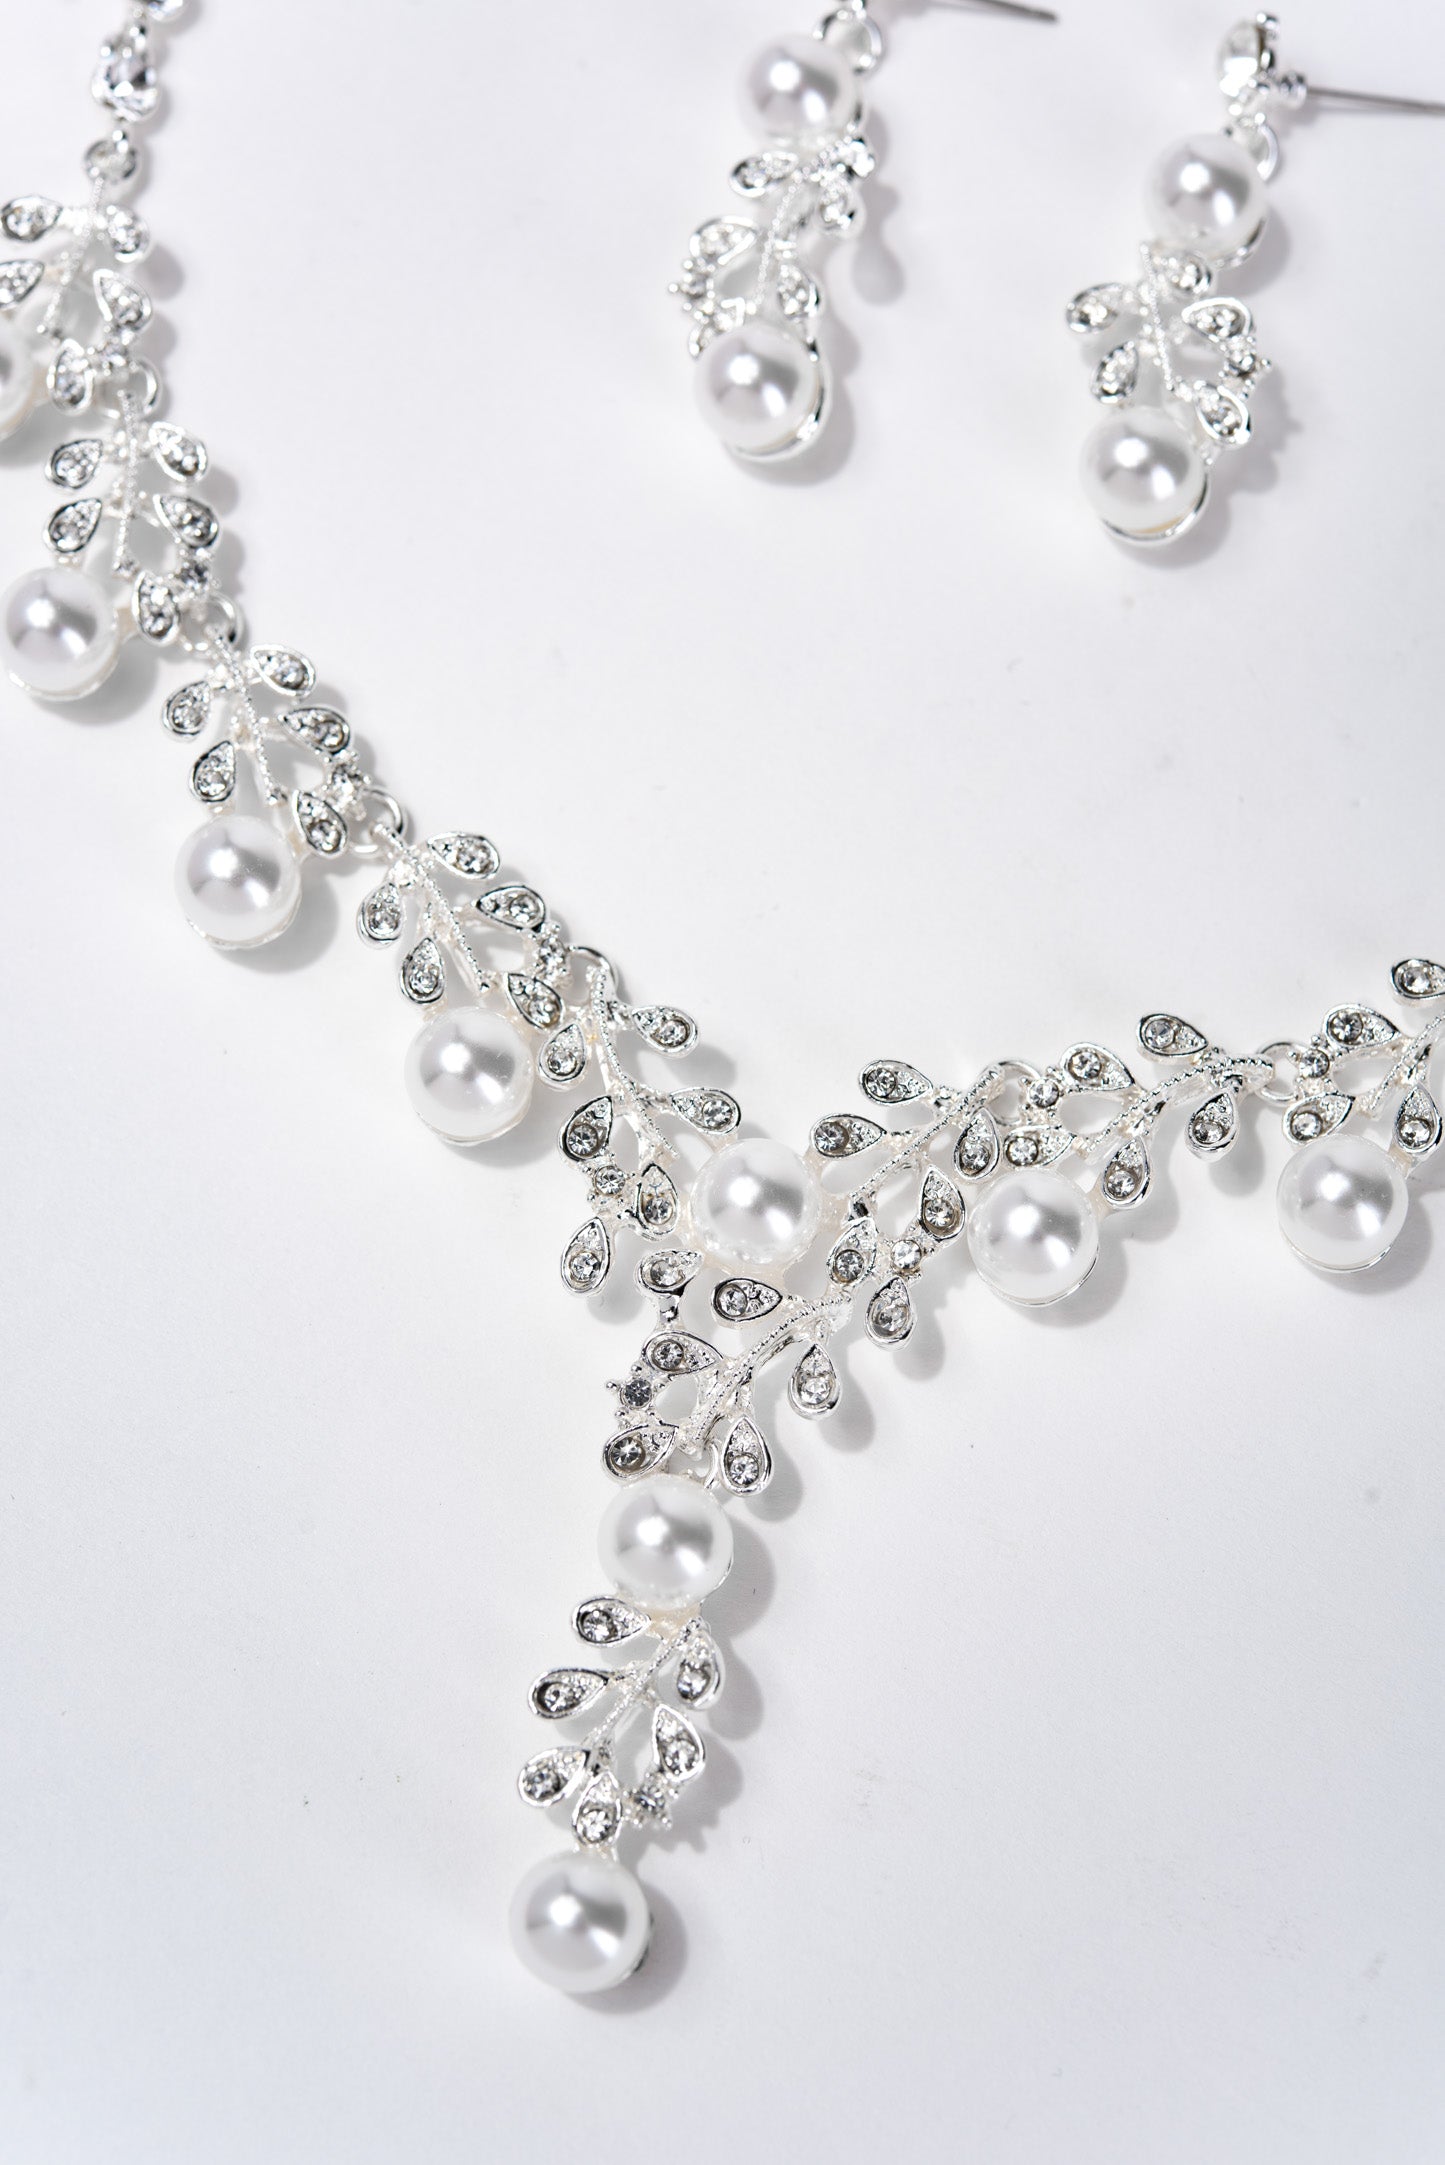 Daisy Elegant Rhinestone Pearl  Cluster Statement Necklace Set - Silver